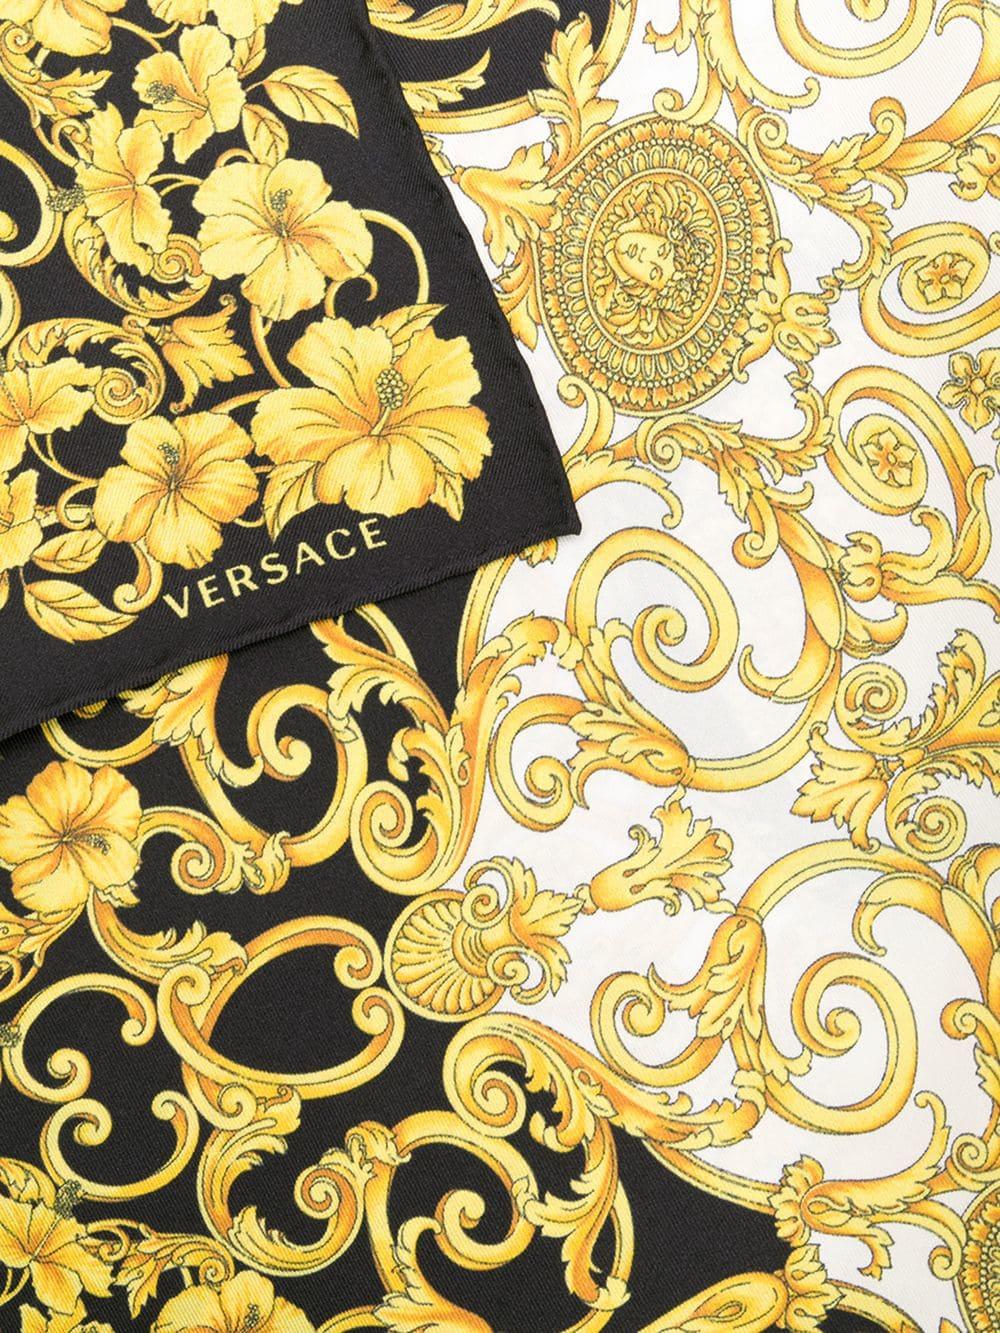 Versace Silk Gold Hibiscus Print Scarf in Black for Men - Lyst